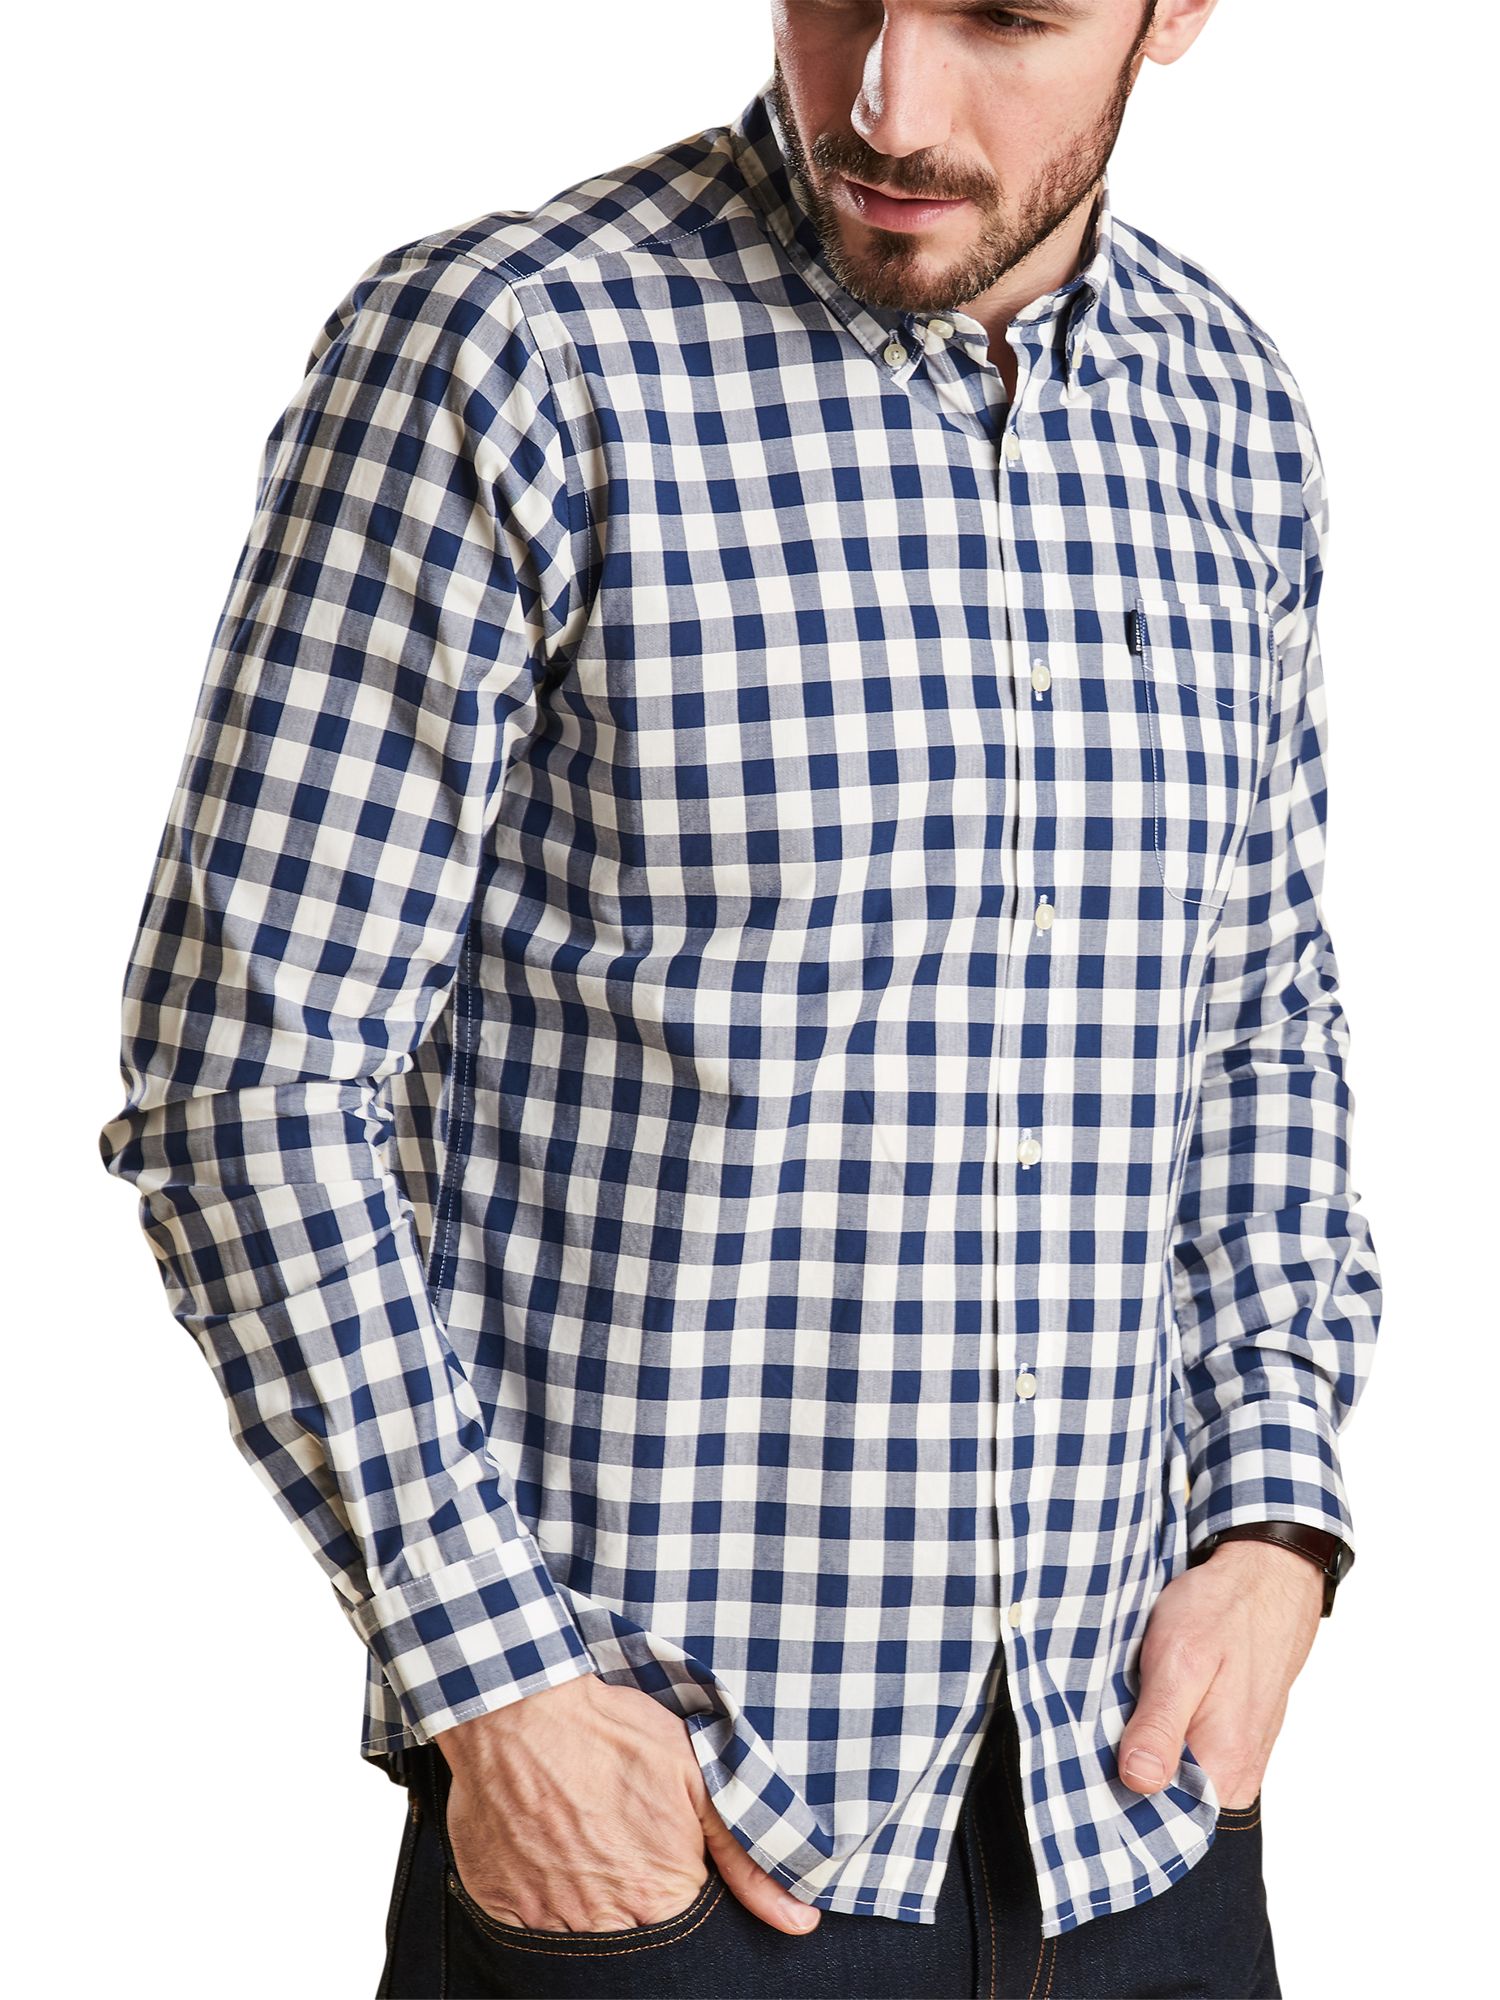 Barbour Endsleigh Gingham Shirt, Blue/White at John Lewis & Partners